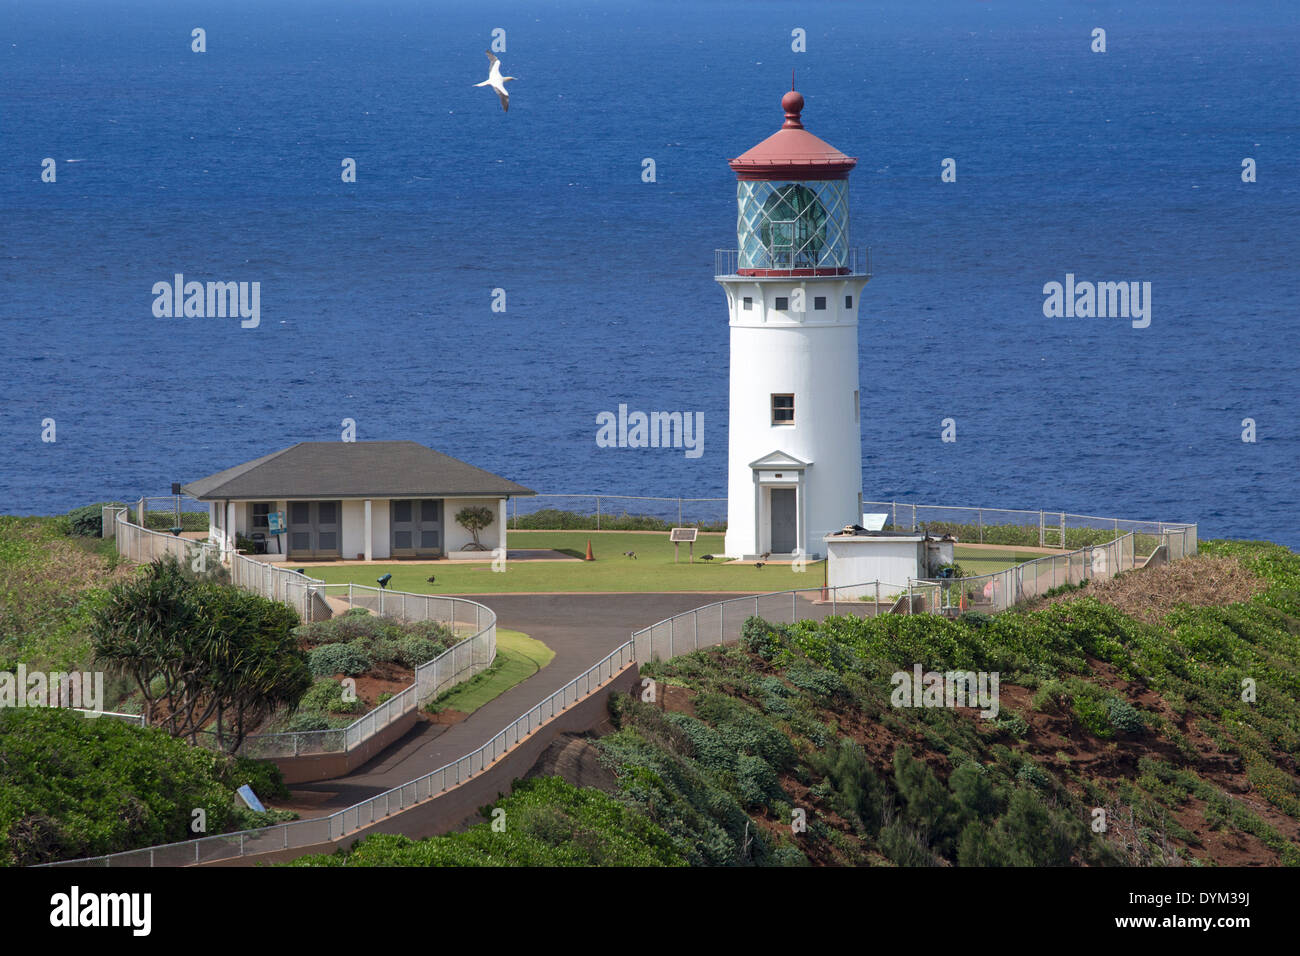 Daniel K. Inouye Kilauea Point Lighthouse and wildlife refuge overlooking Pacific Ocean Stock Photo